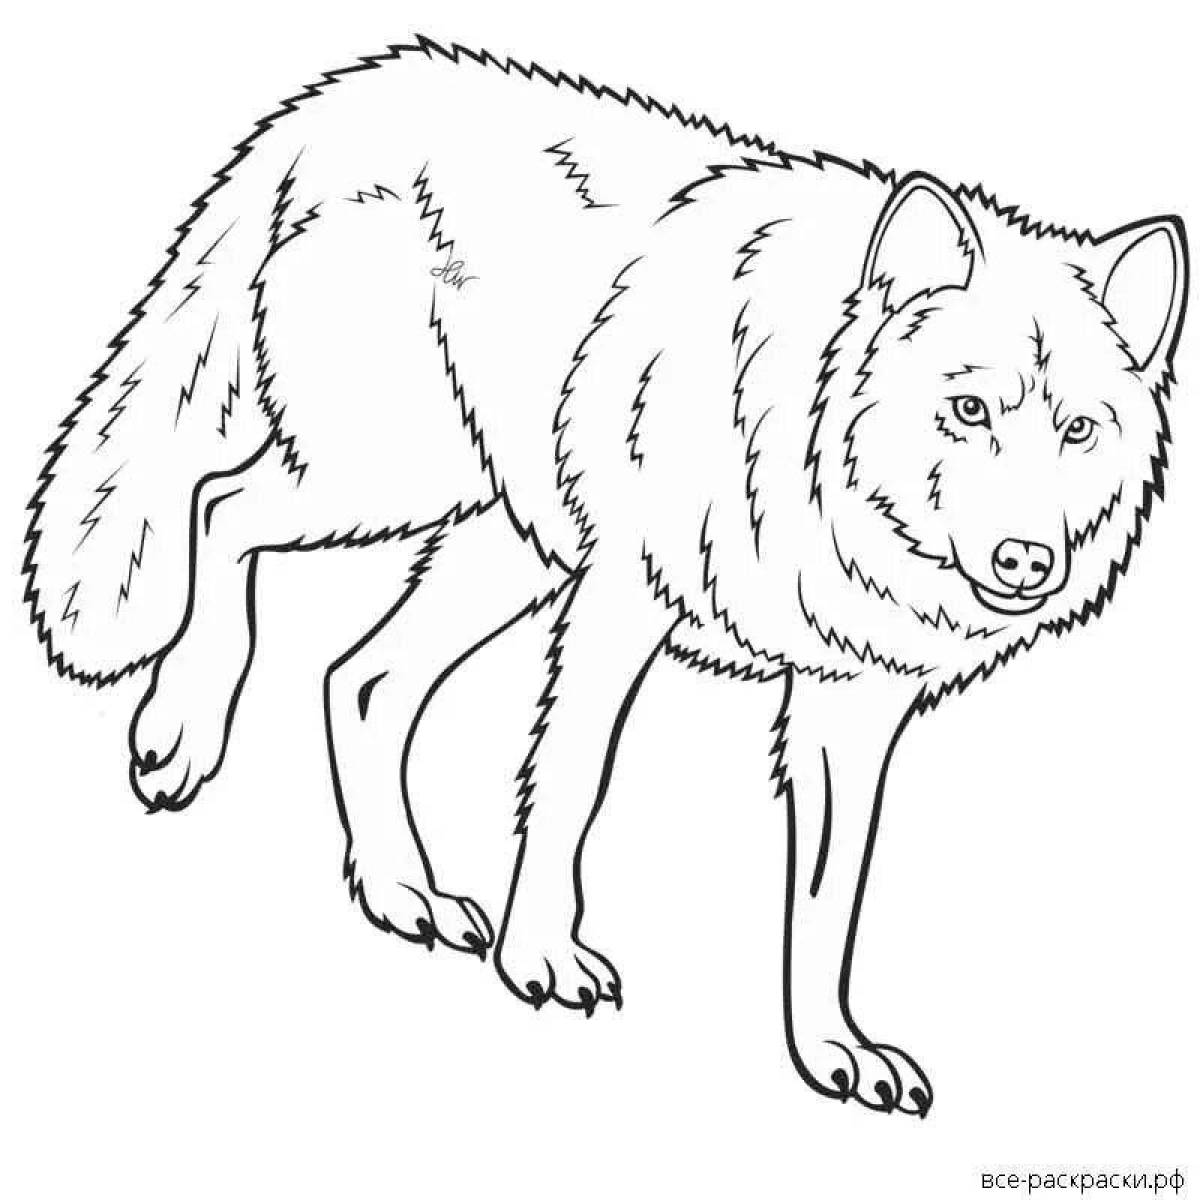 Изысканная раскраска рыжий волк